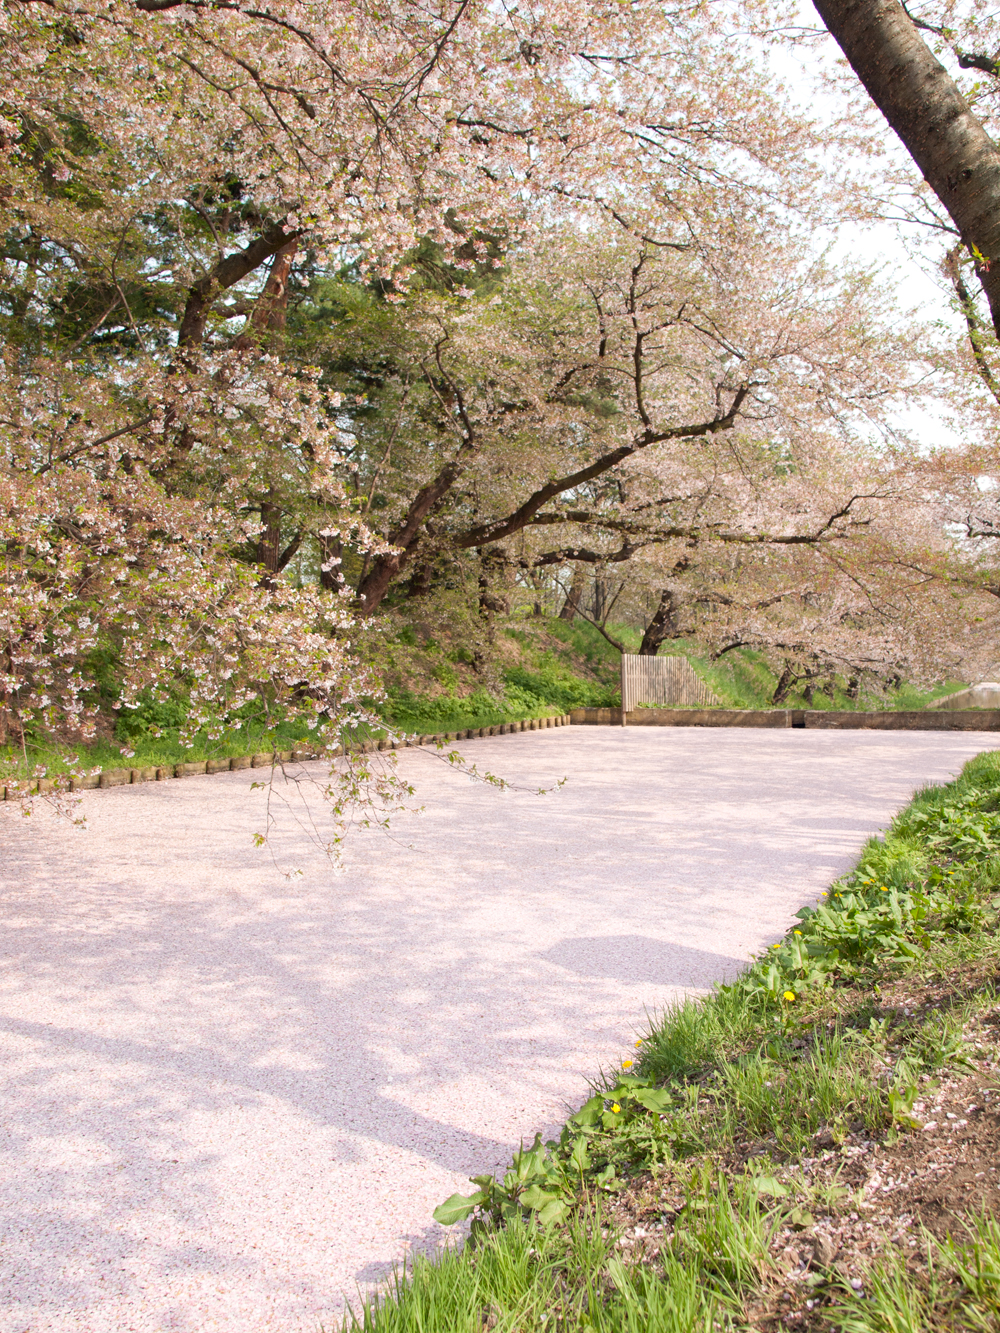 2015年4月28日 弘前公園・弘前城 外濠の桜の様子